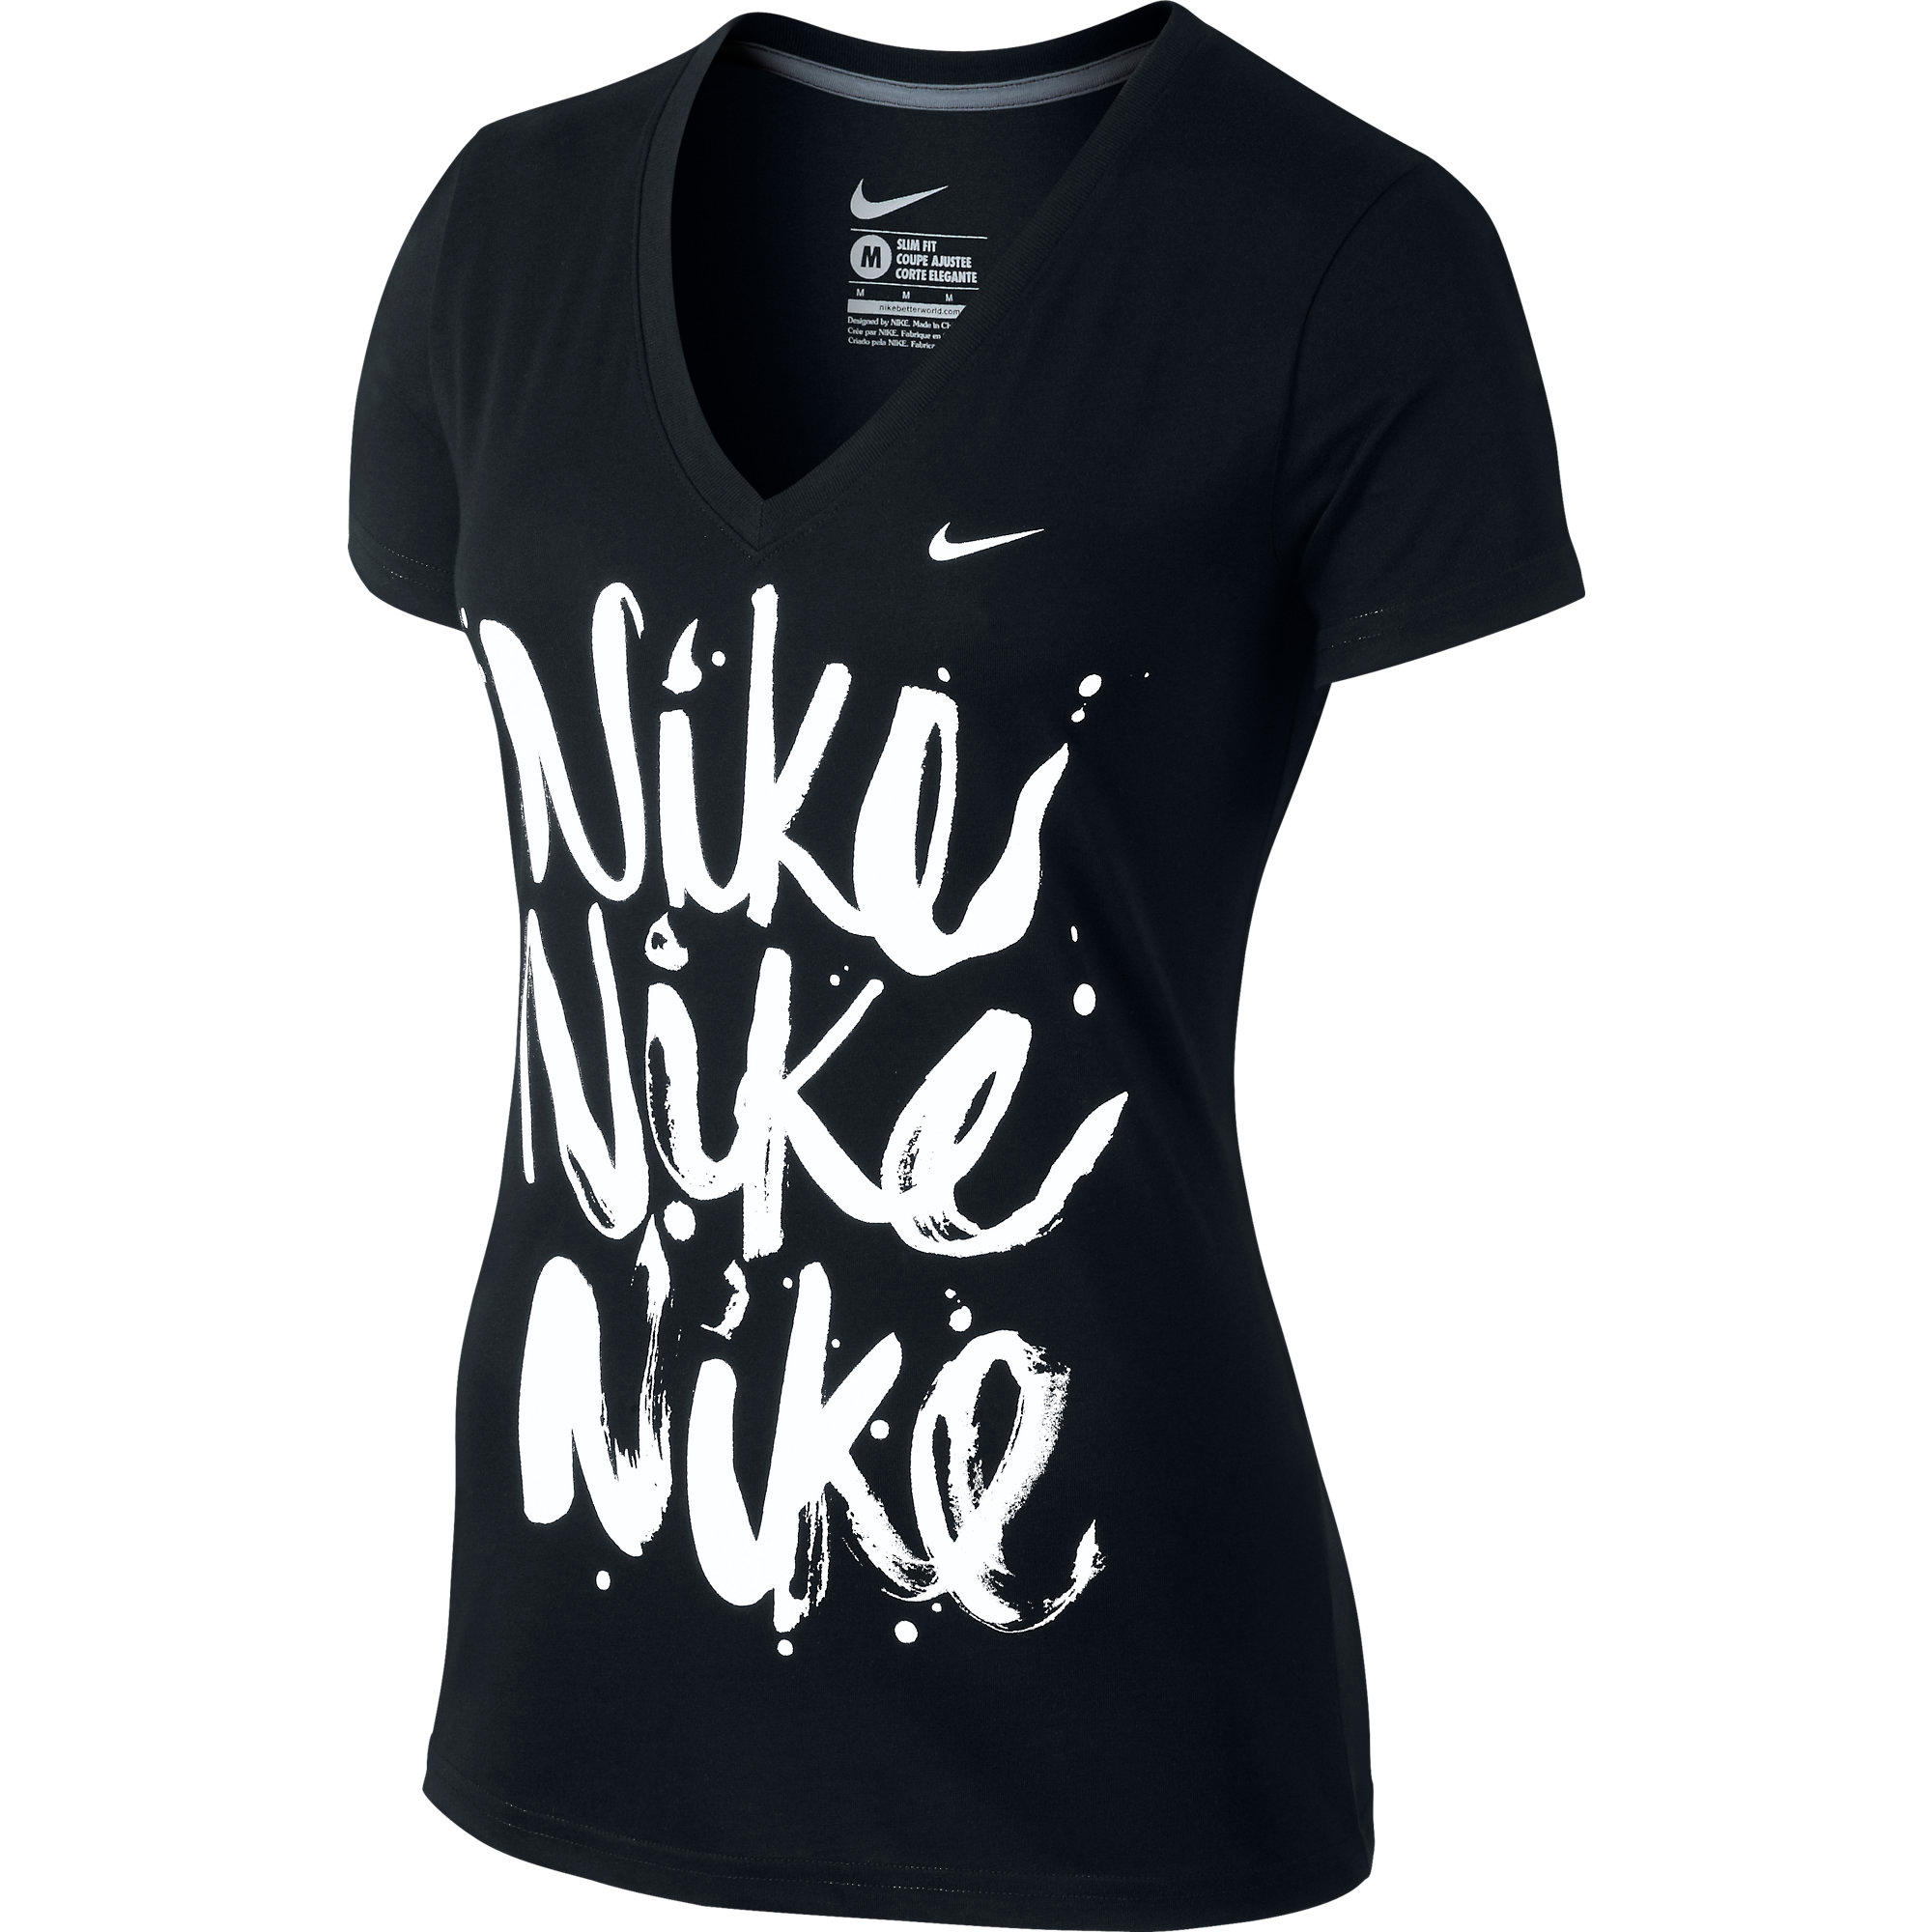 NIKE Women's Fitness T-Shirt - Black